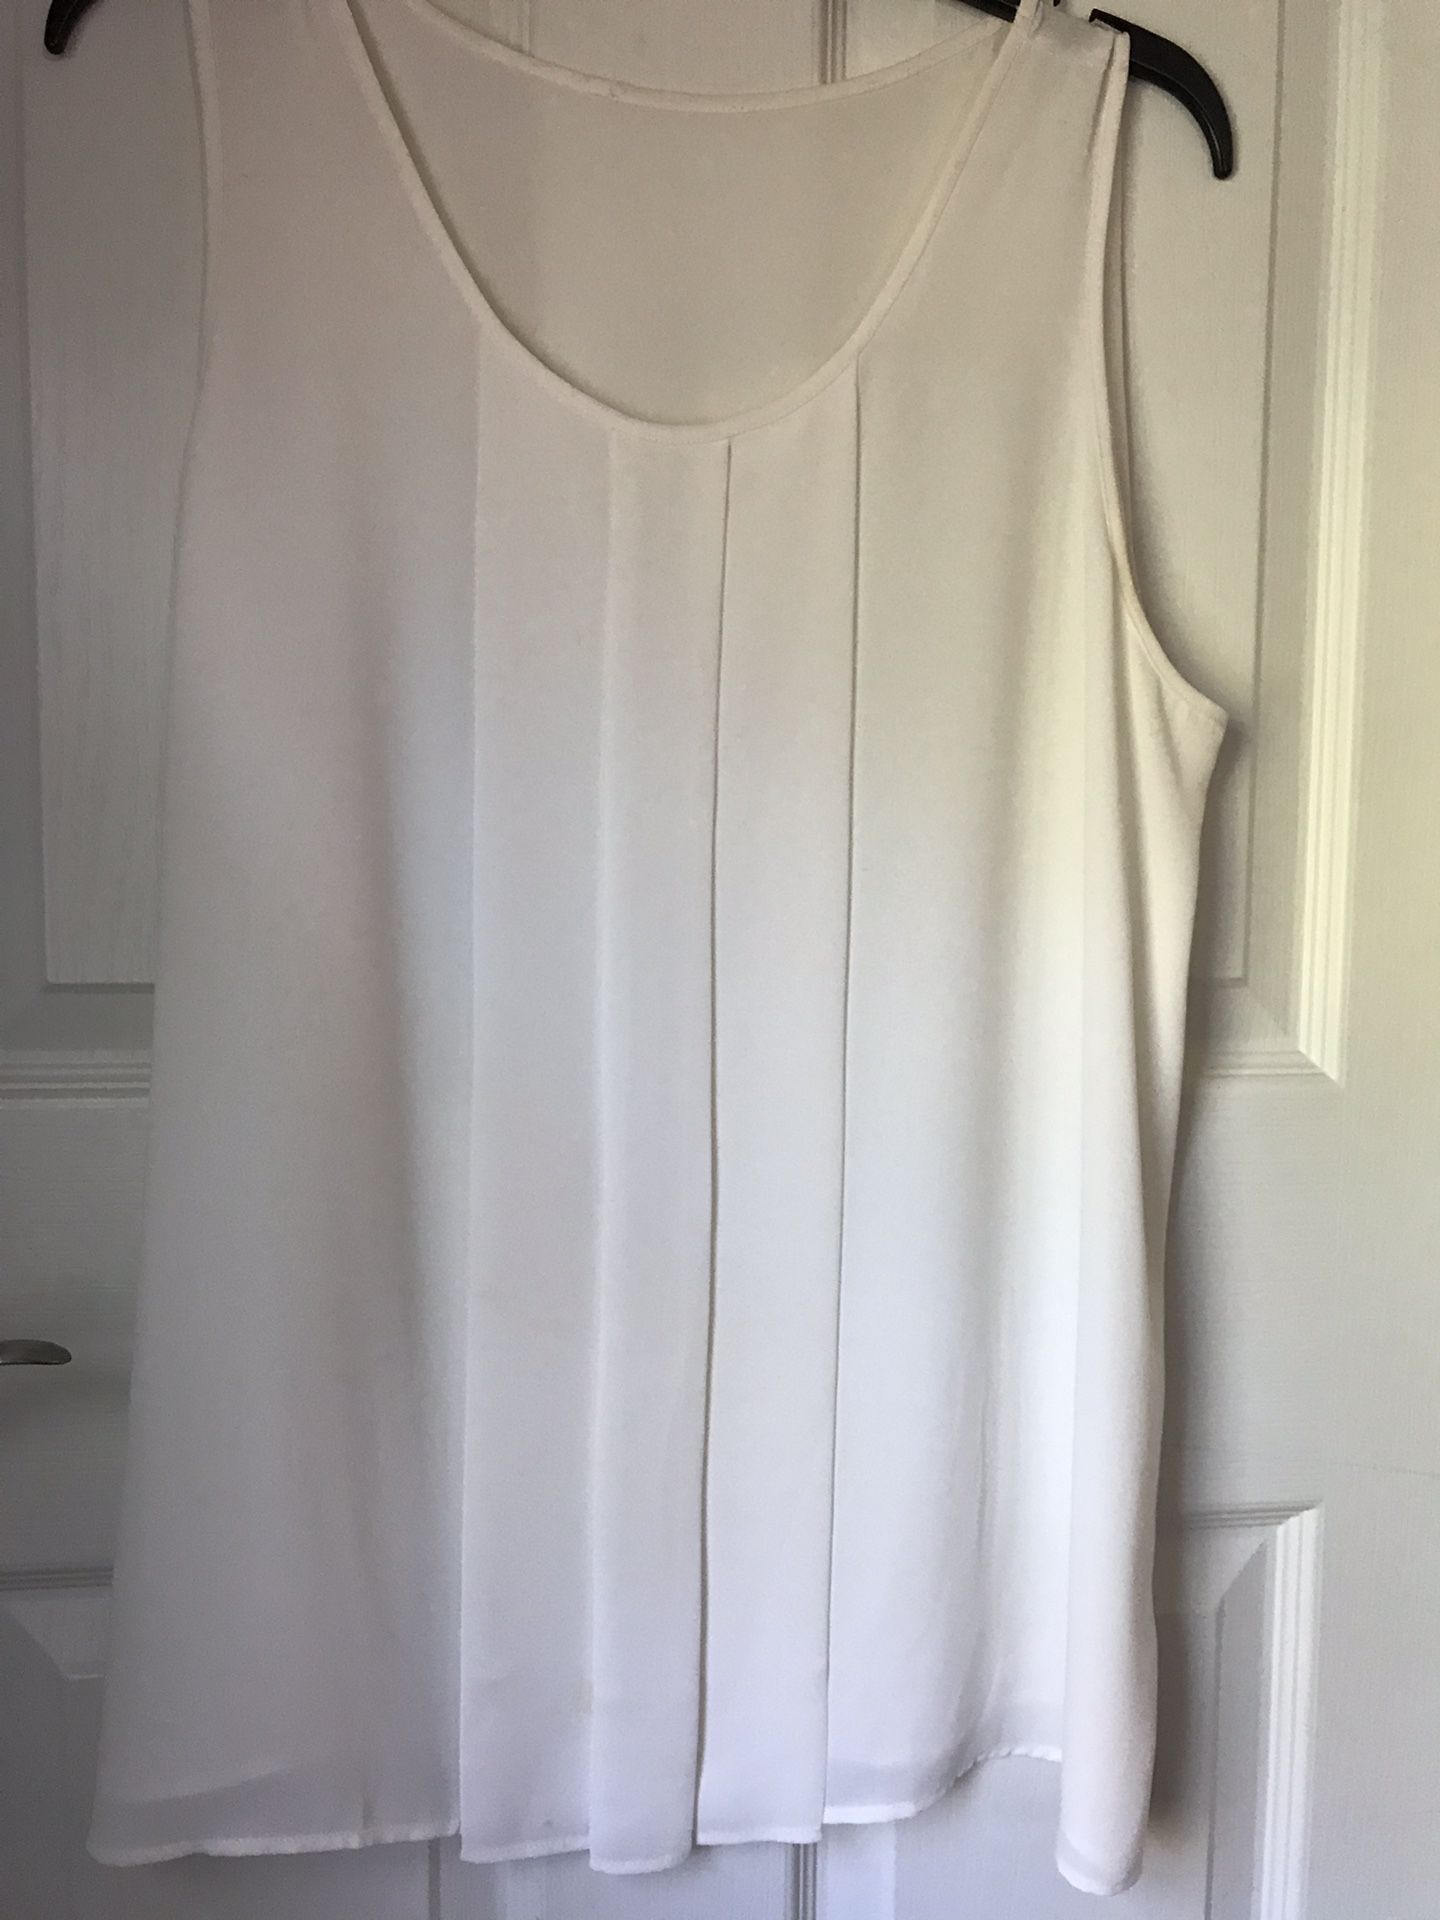 Elegant, pleated front blouse, size large